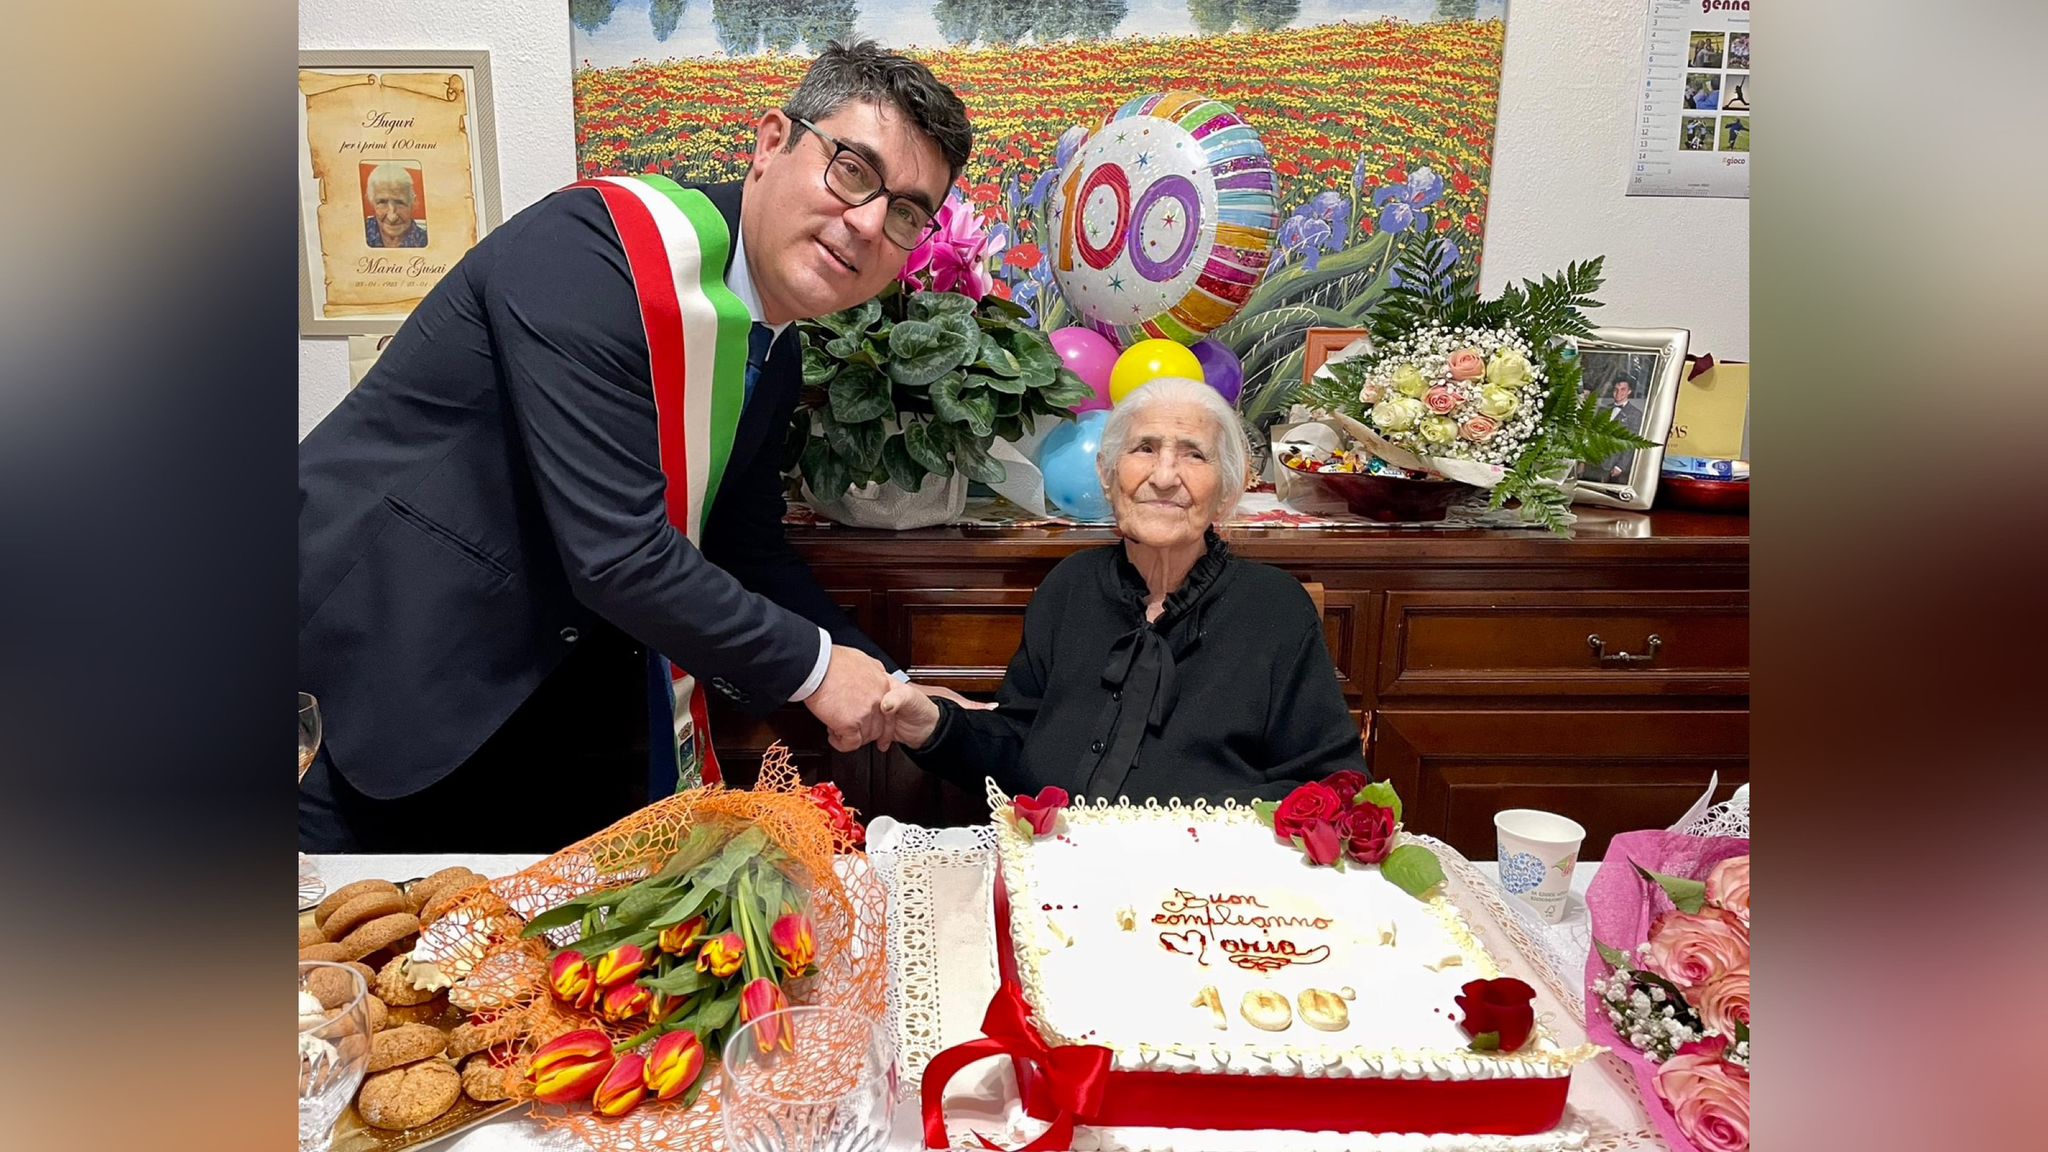 Sardegna: auguri a Maria Gusai che festeggia i 100 anni